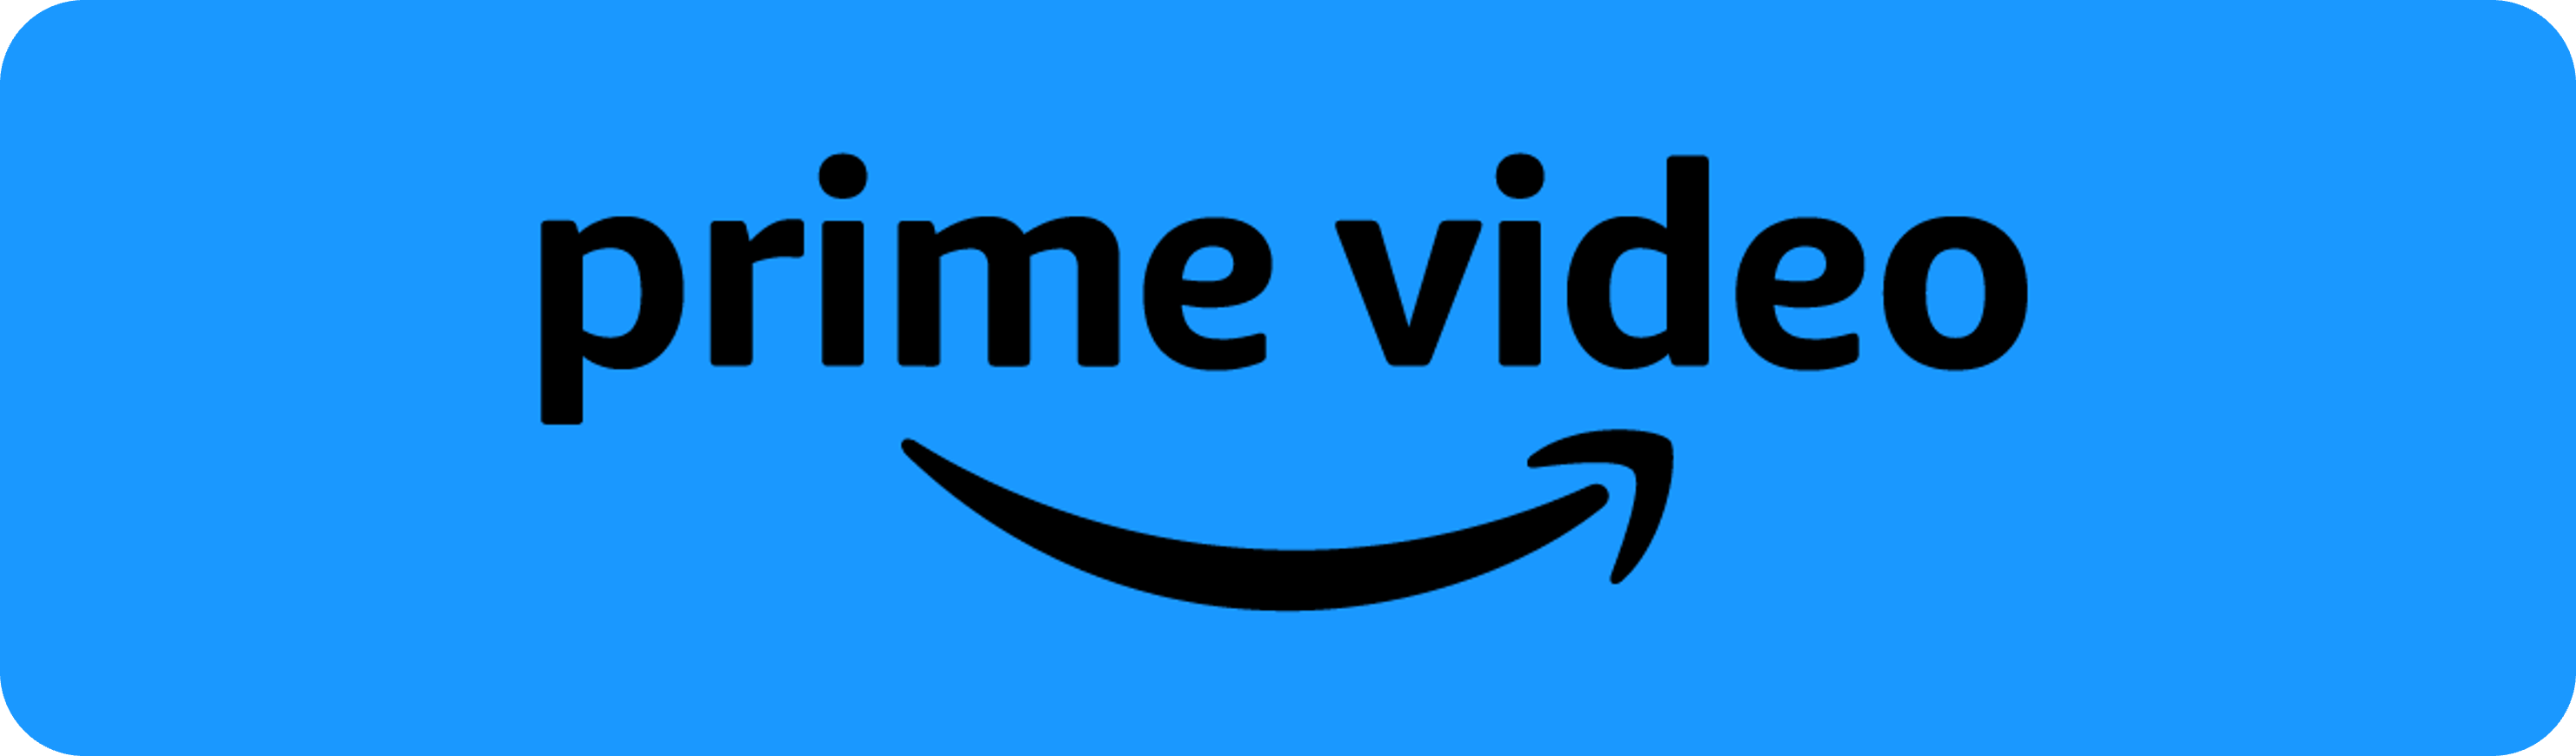 Prime Video Blue Logo APPROVATO